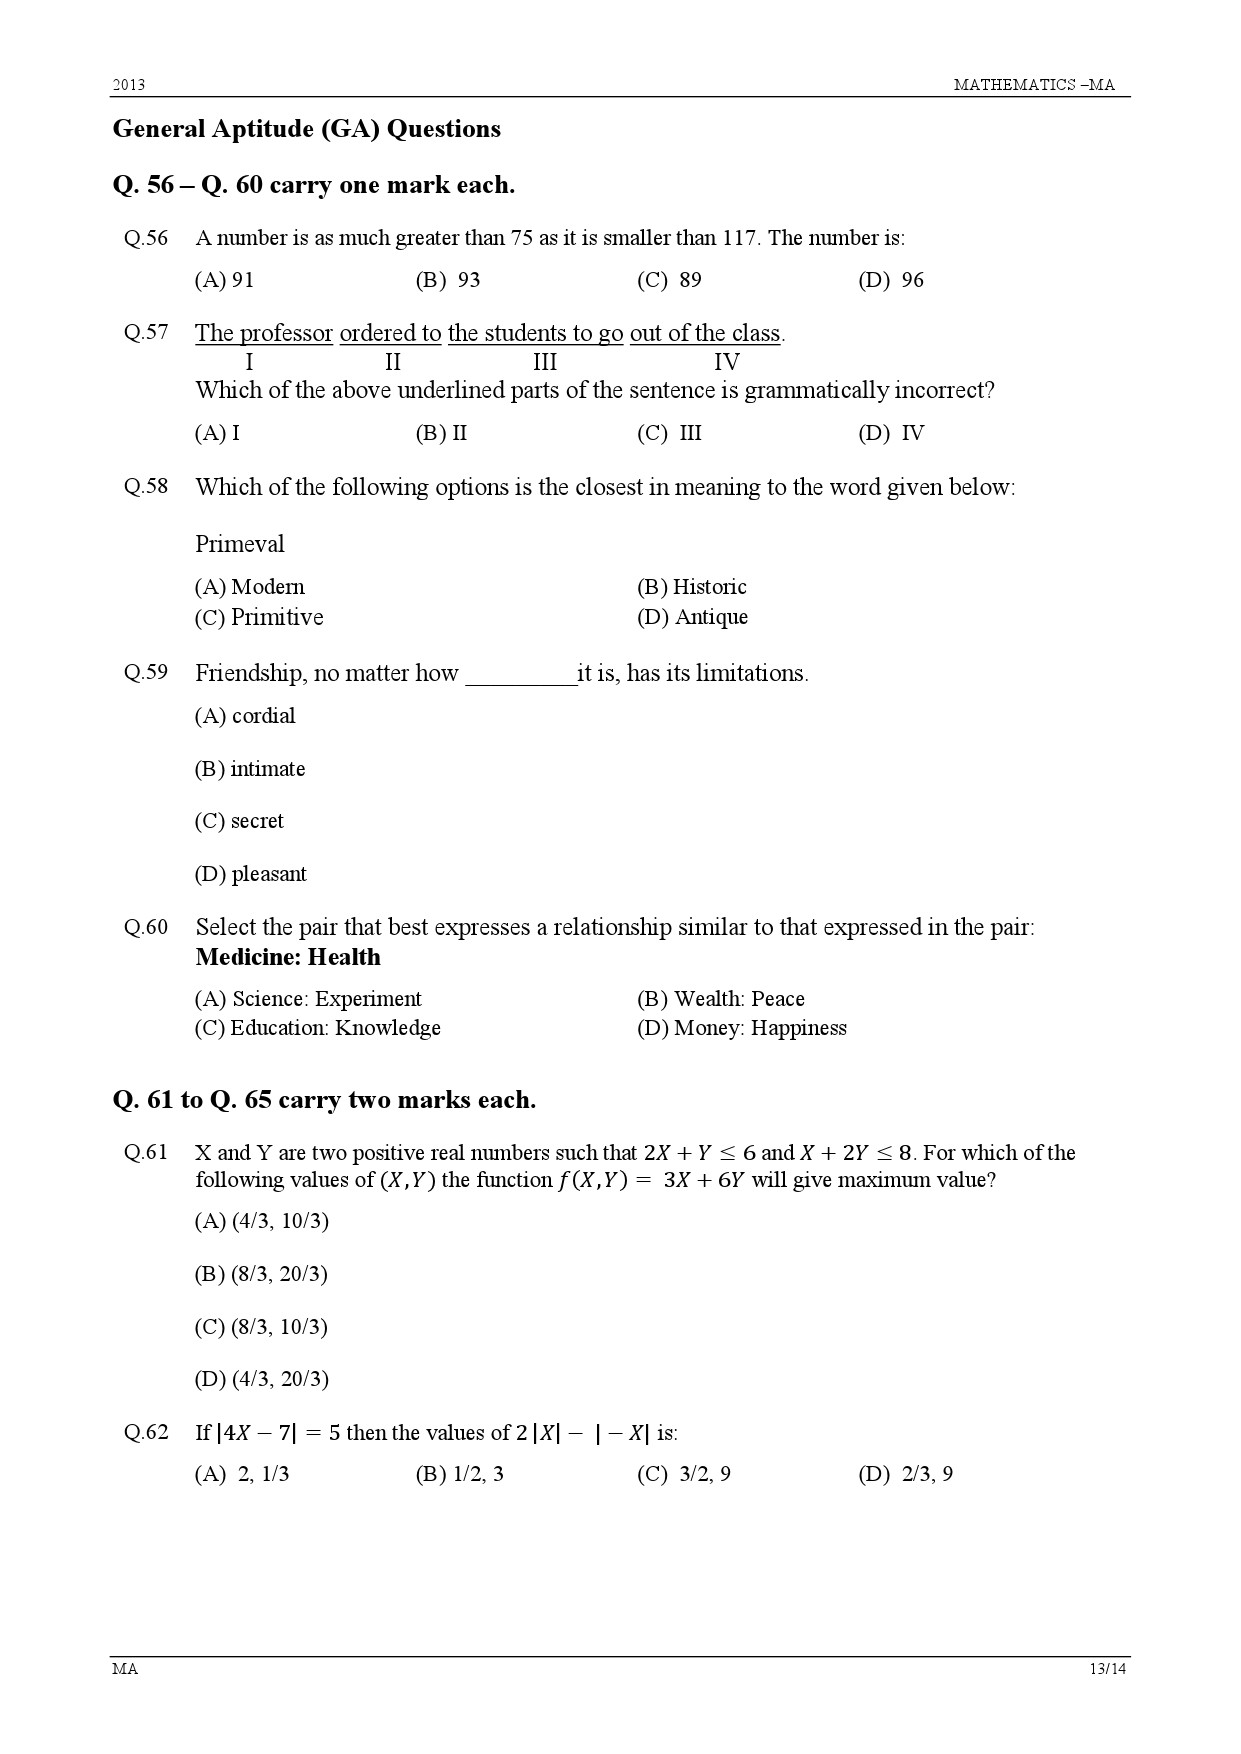 GATE Exam Question Paper 2013 Mathematics 13